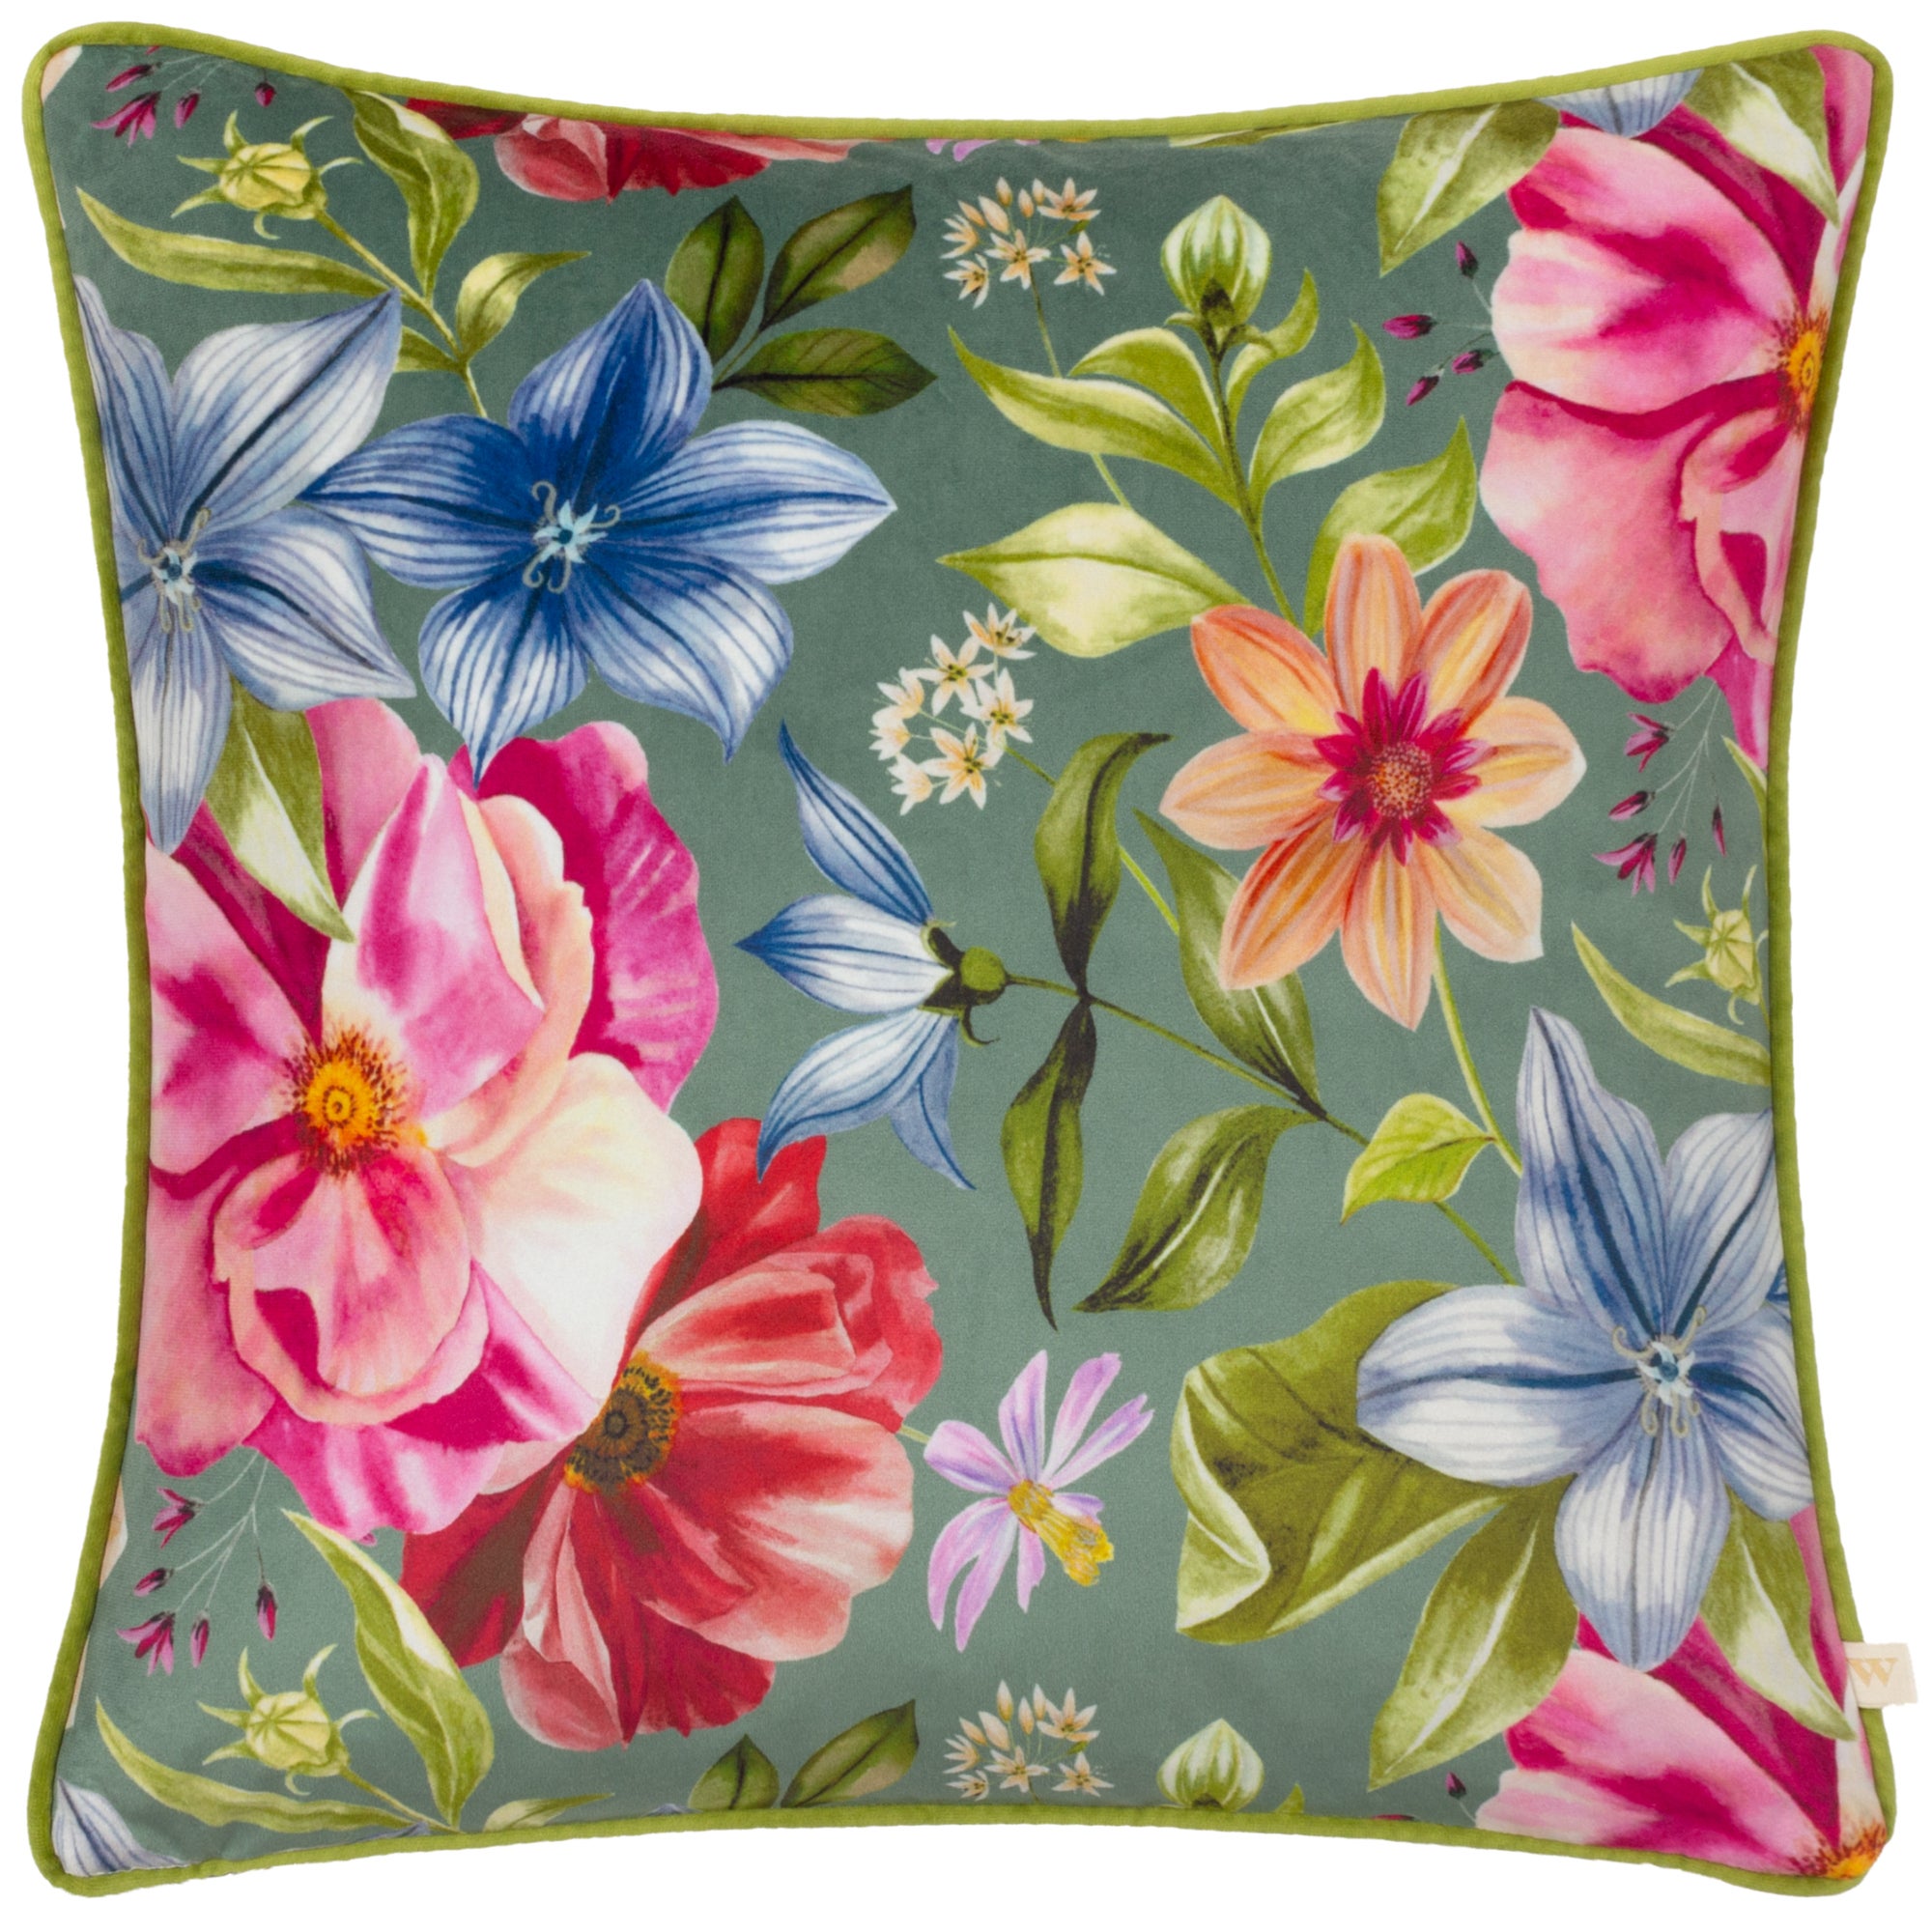 Wylder Nectar Garden Petunia Square Cushion Teal Blue